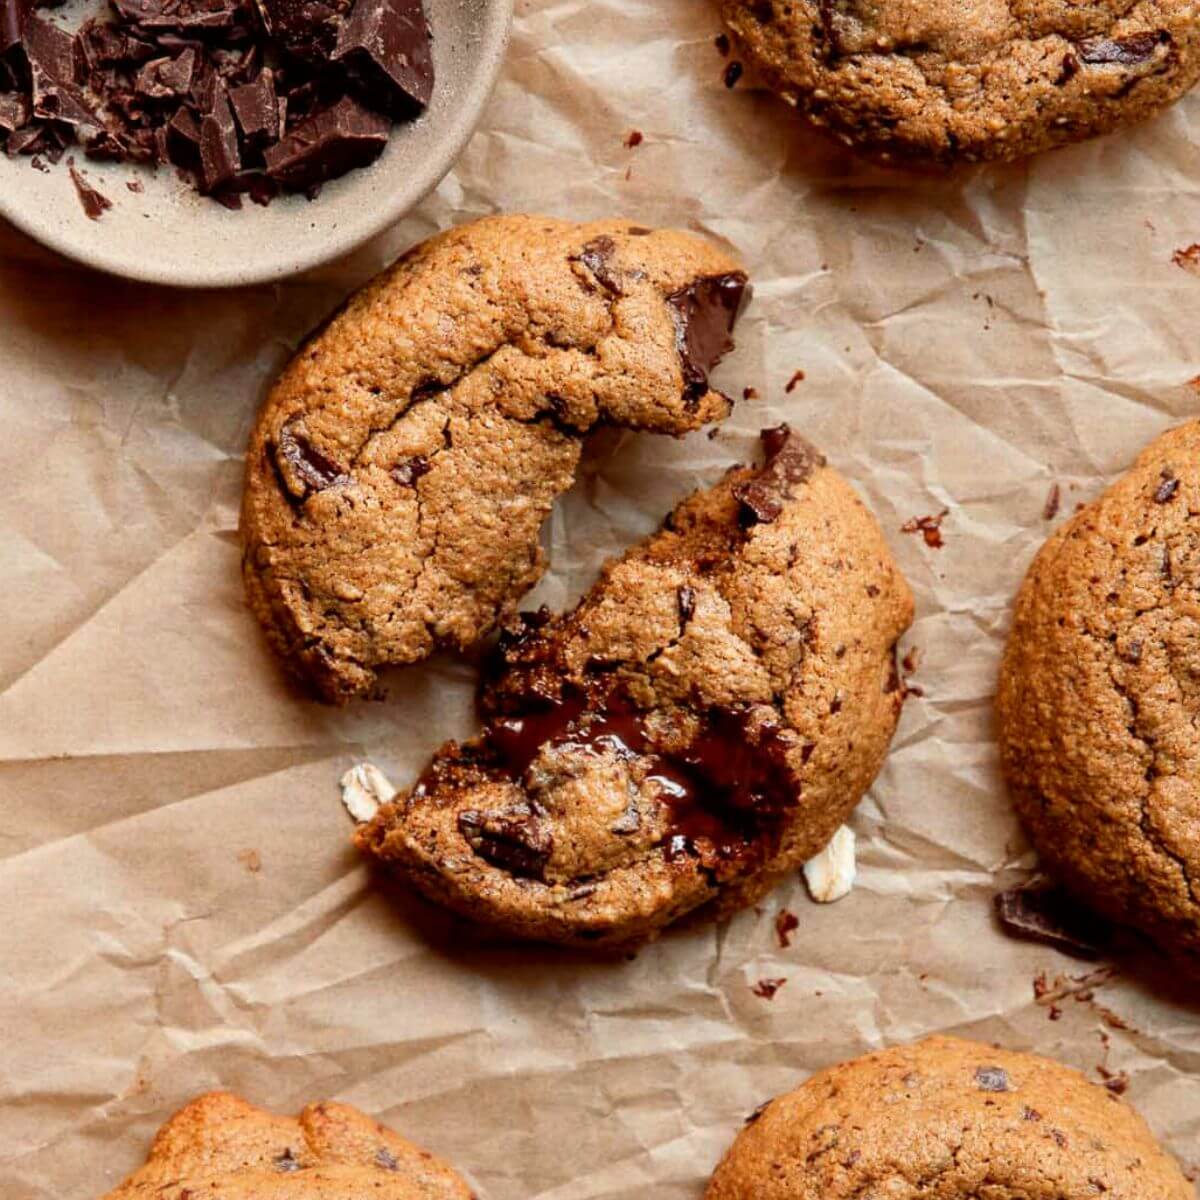 https://healthfulblondie.com/wp-content/uploads/2022/11/oat-flour-chocolate-chip-cookies.jpg